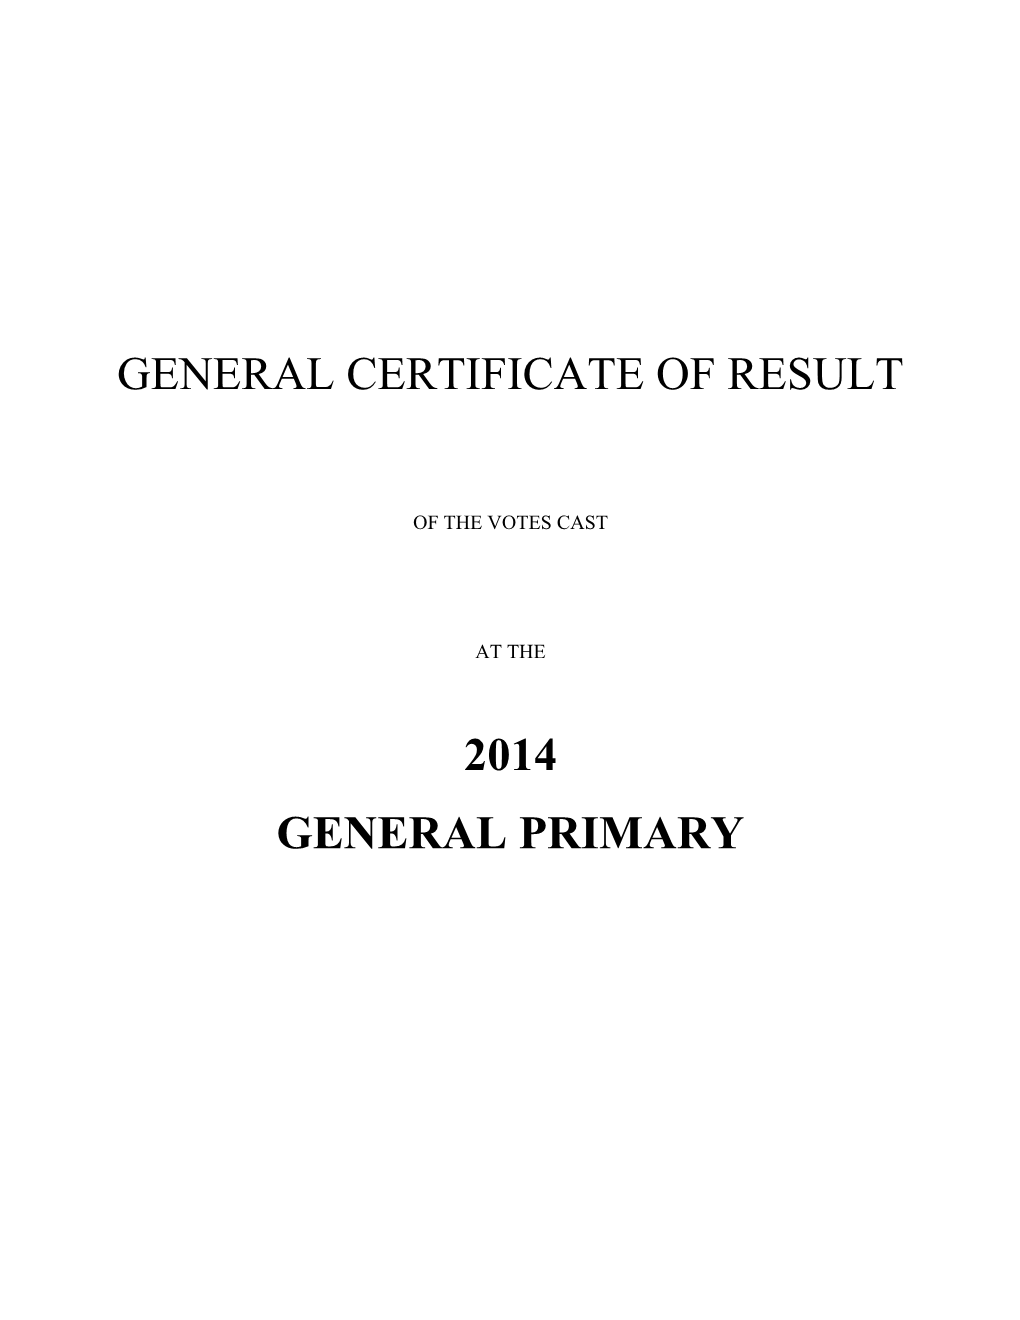 General Certificate of Result 2014 General Primary